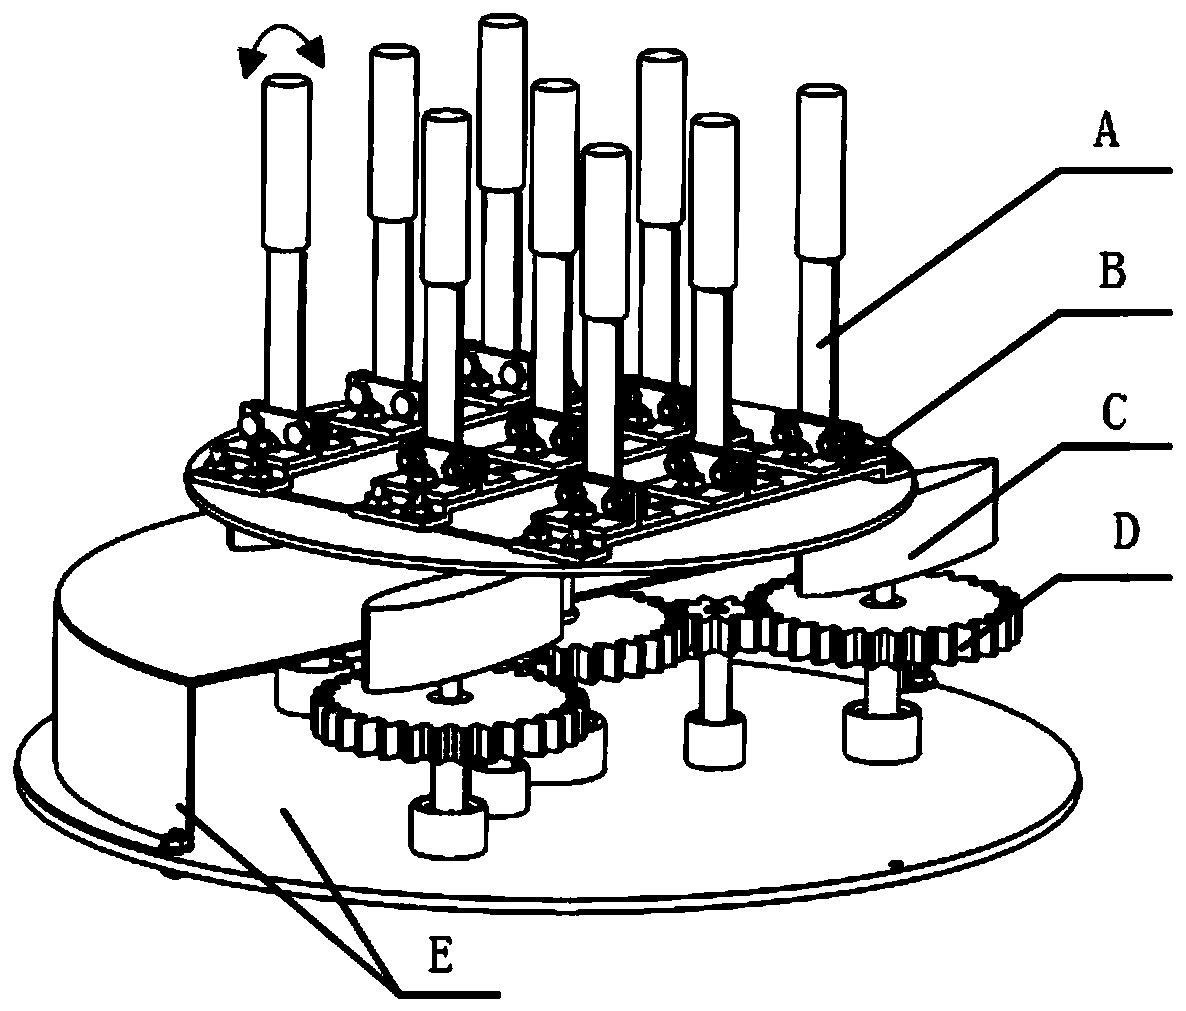 Array arrangement type piezoelectric energy harvester applied to non-directional flow